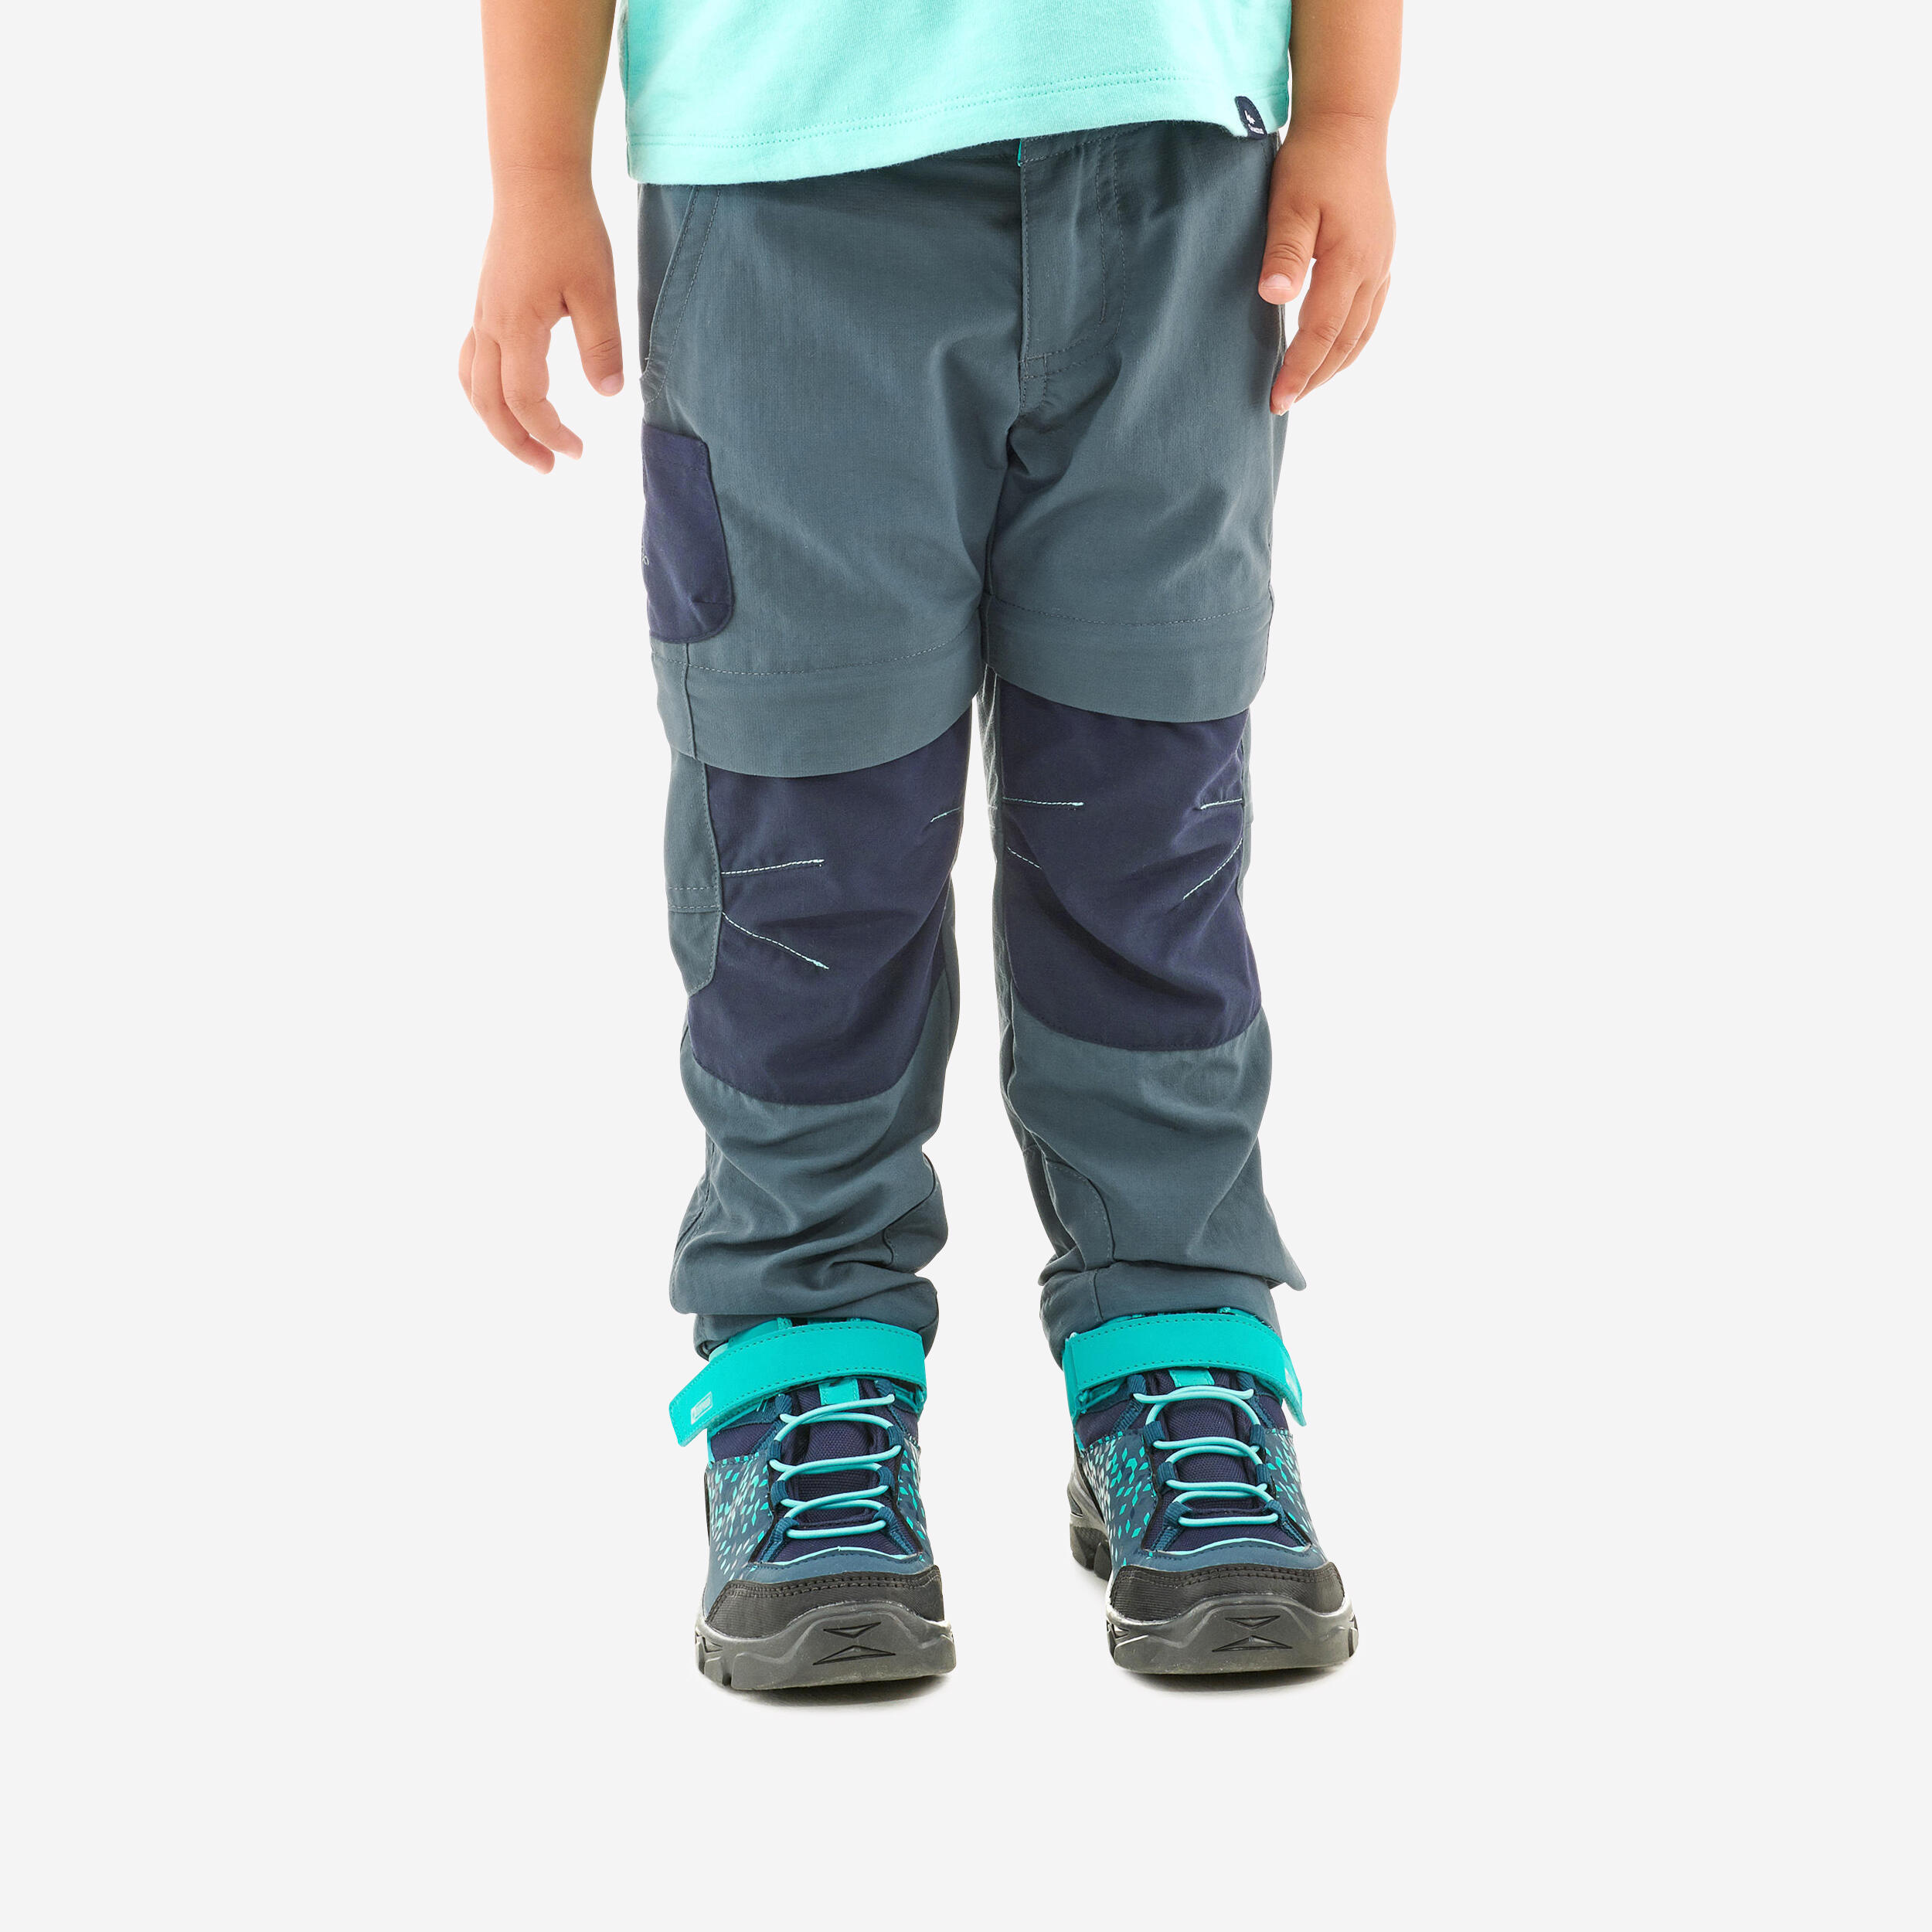 Pantalon de randonnée convertible enfant – MH 500 gris/bleu - QUECHUA